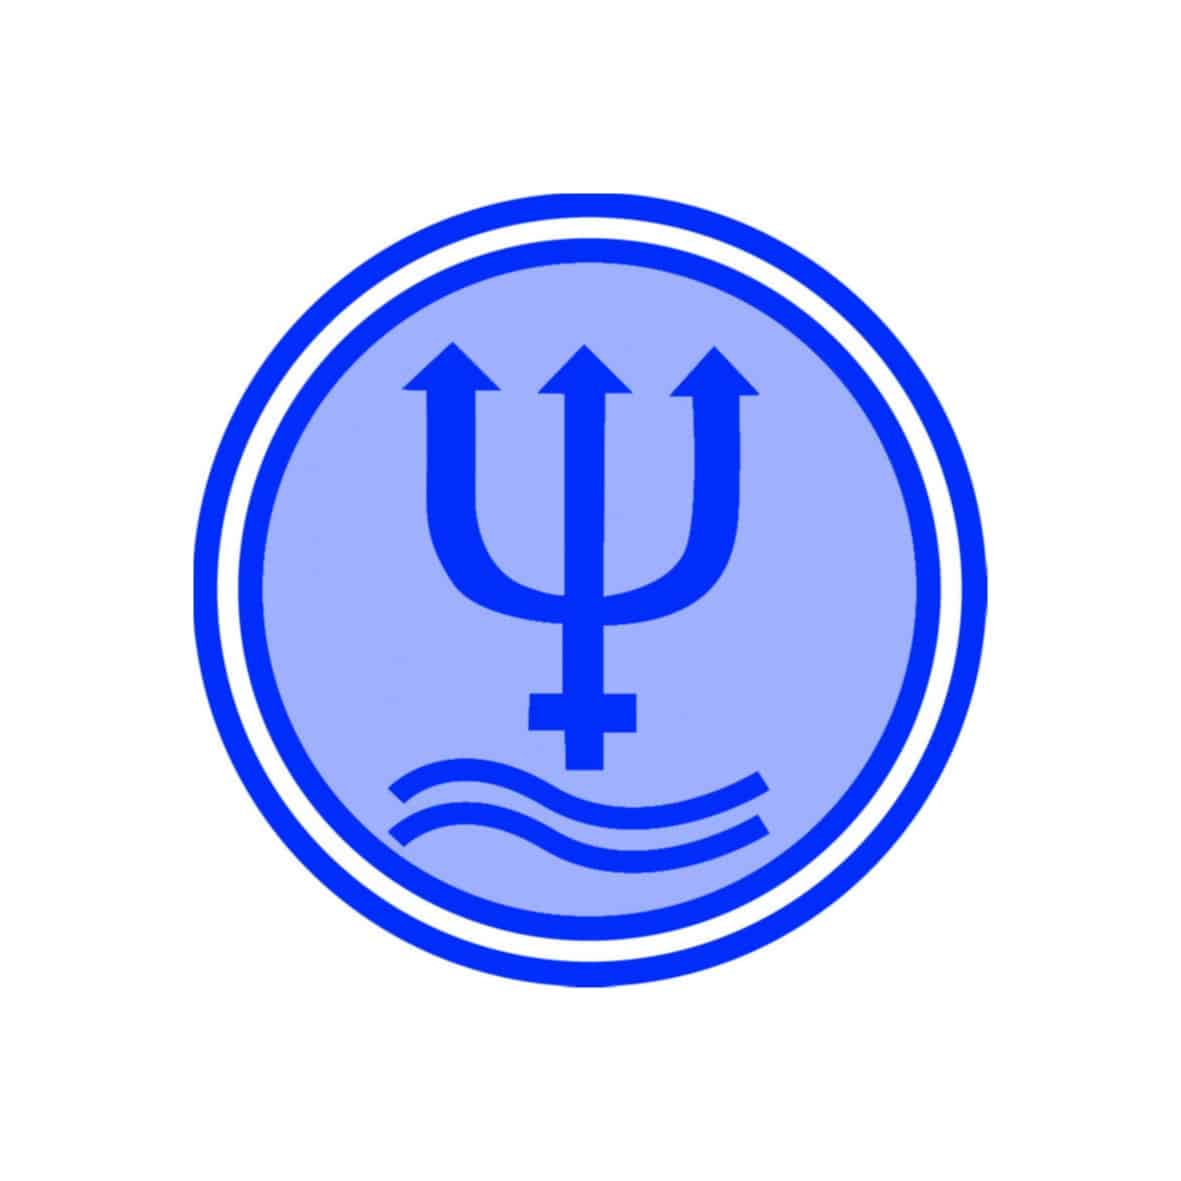 Neptune Environmental Services Ltd